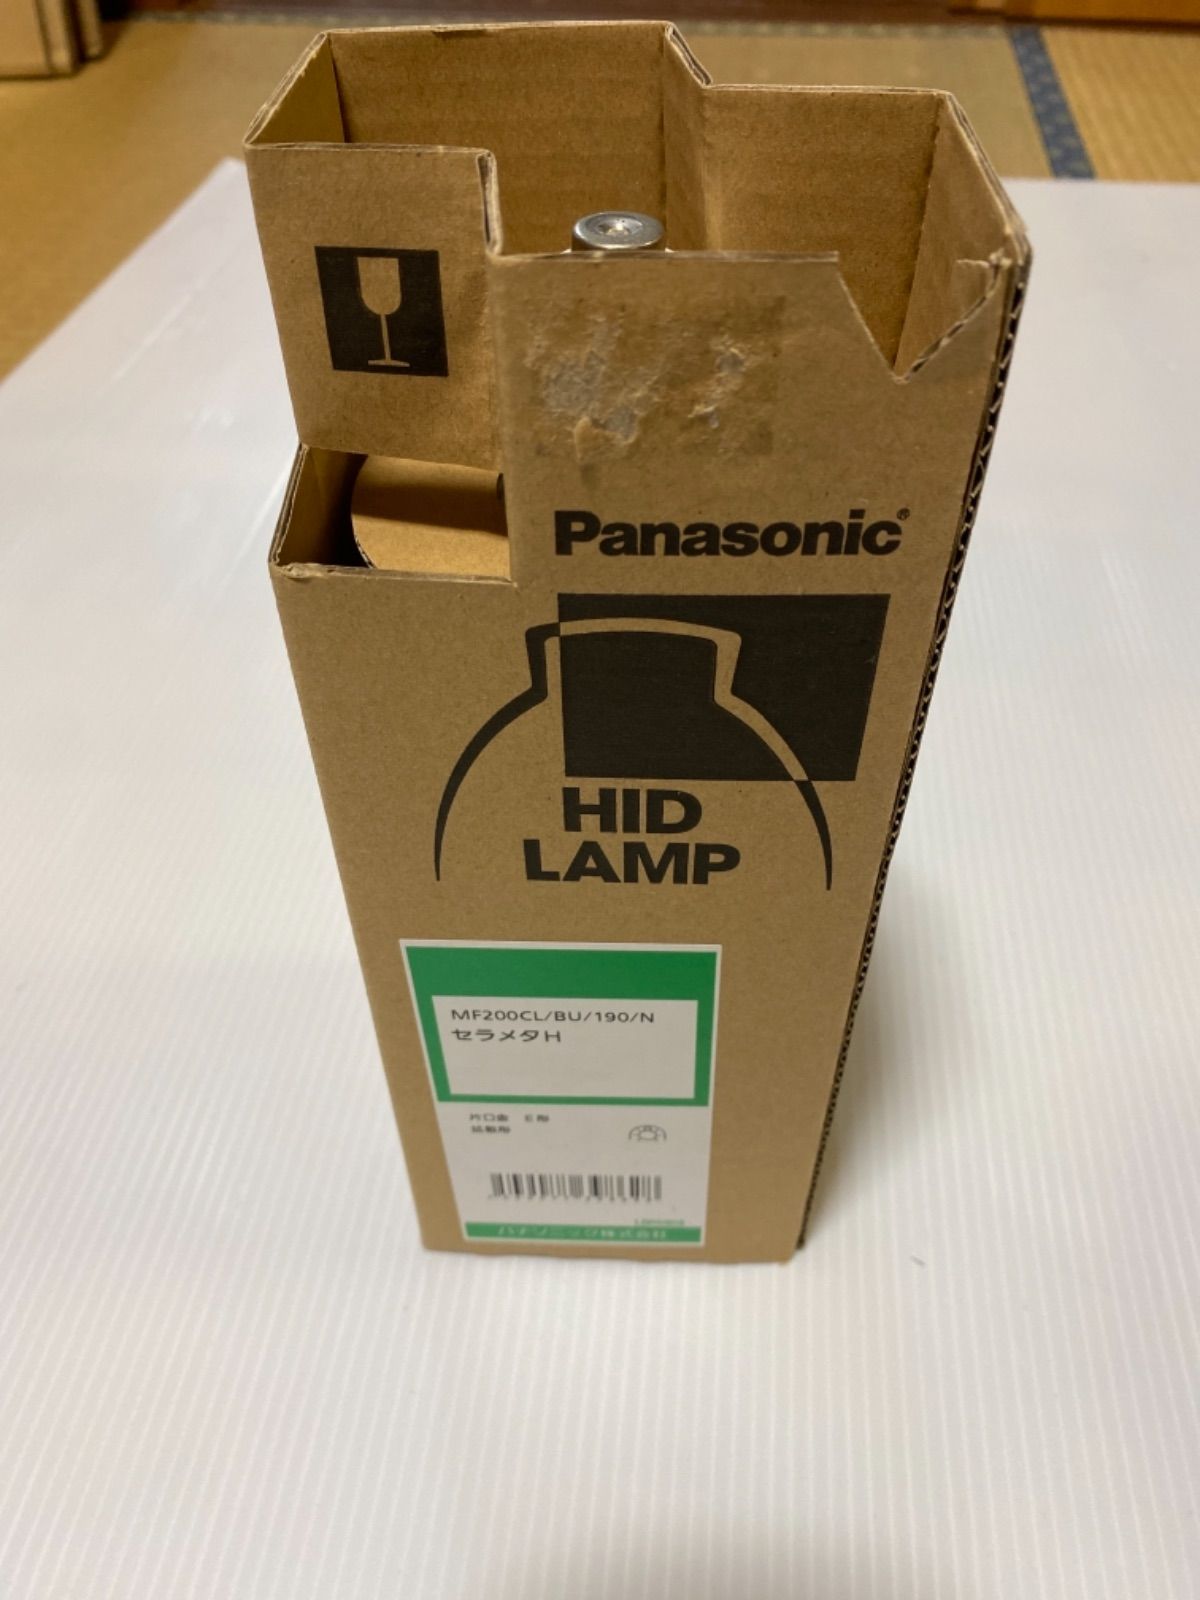 HIDランプ セラメタH MF200CL/BU/190/N 6本入/1箱 - 天井照明